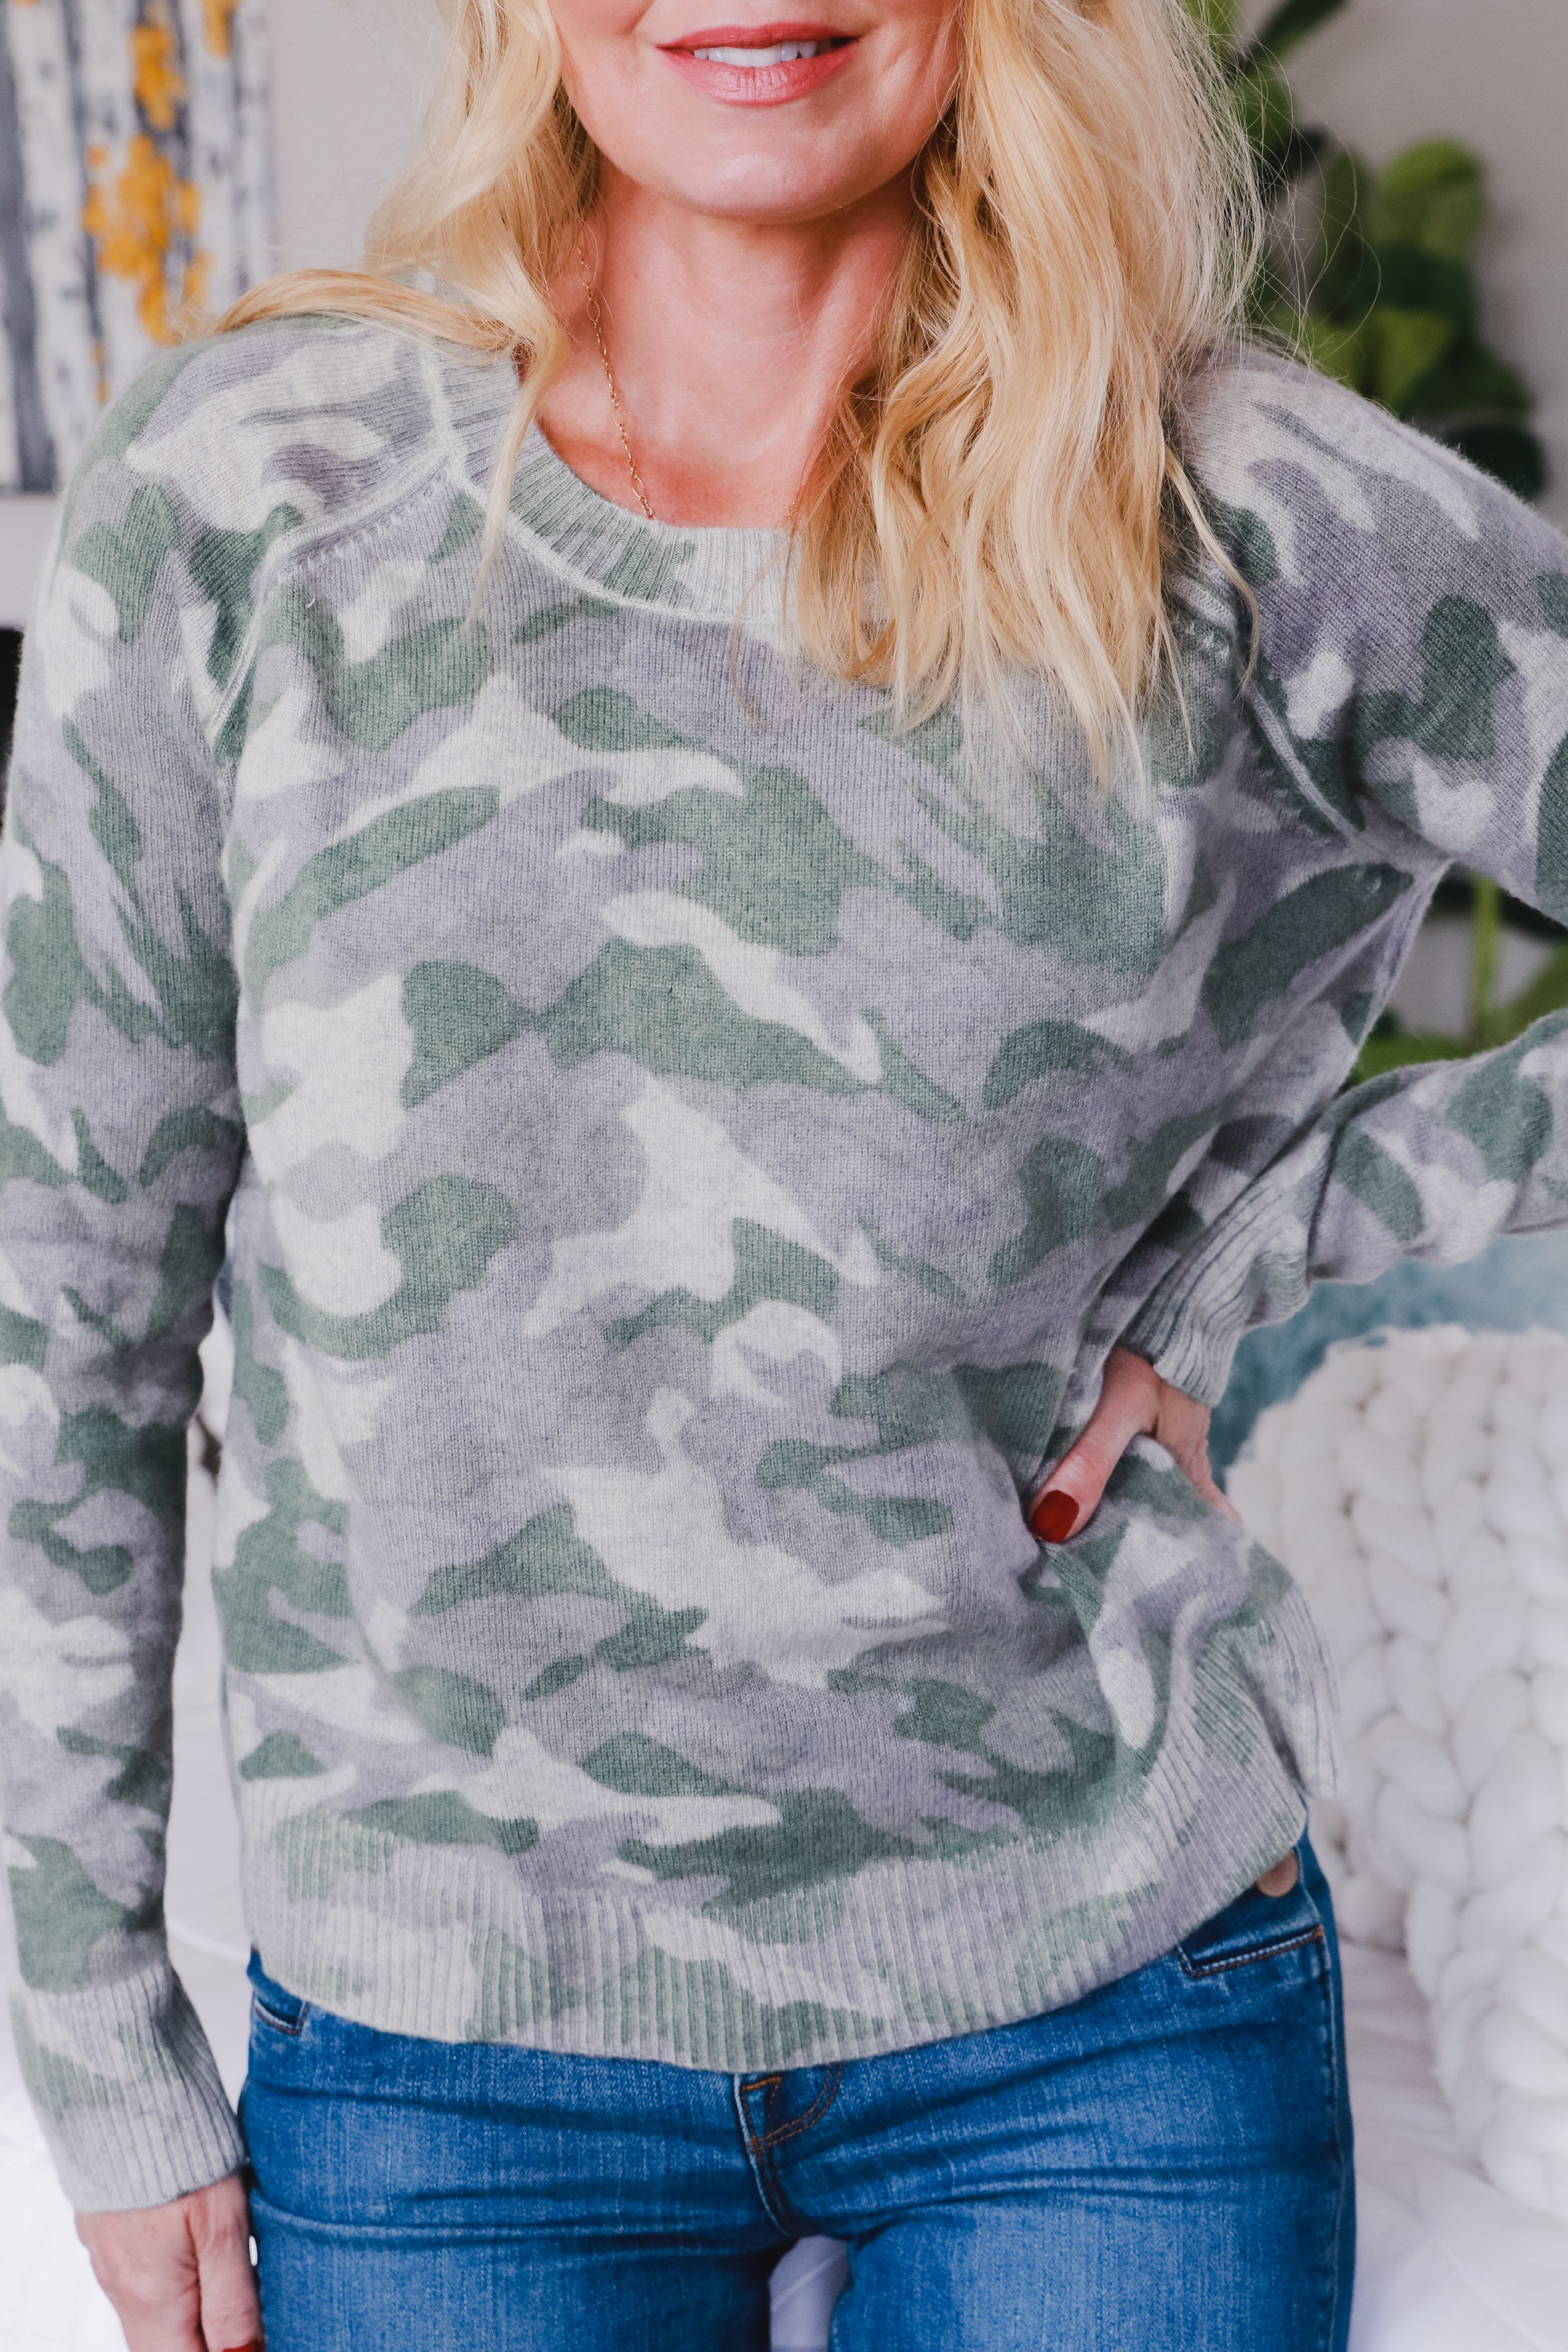 Aqua green camouflage women's crewneck long sleeve cashmere sweater